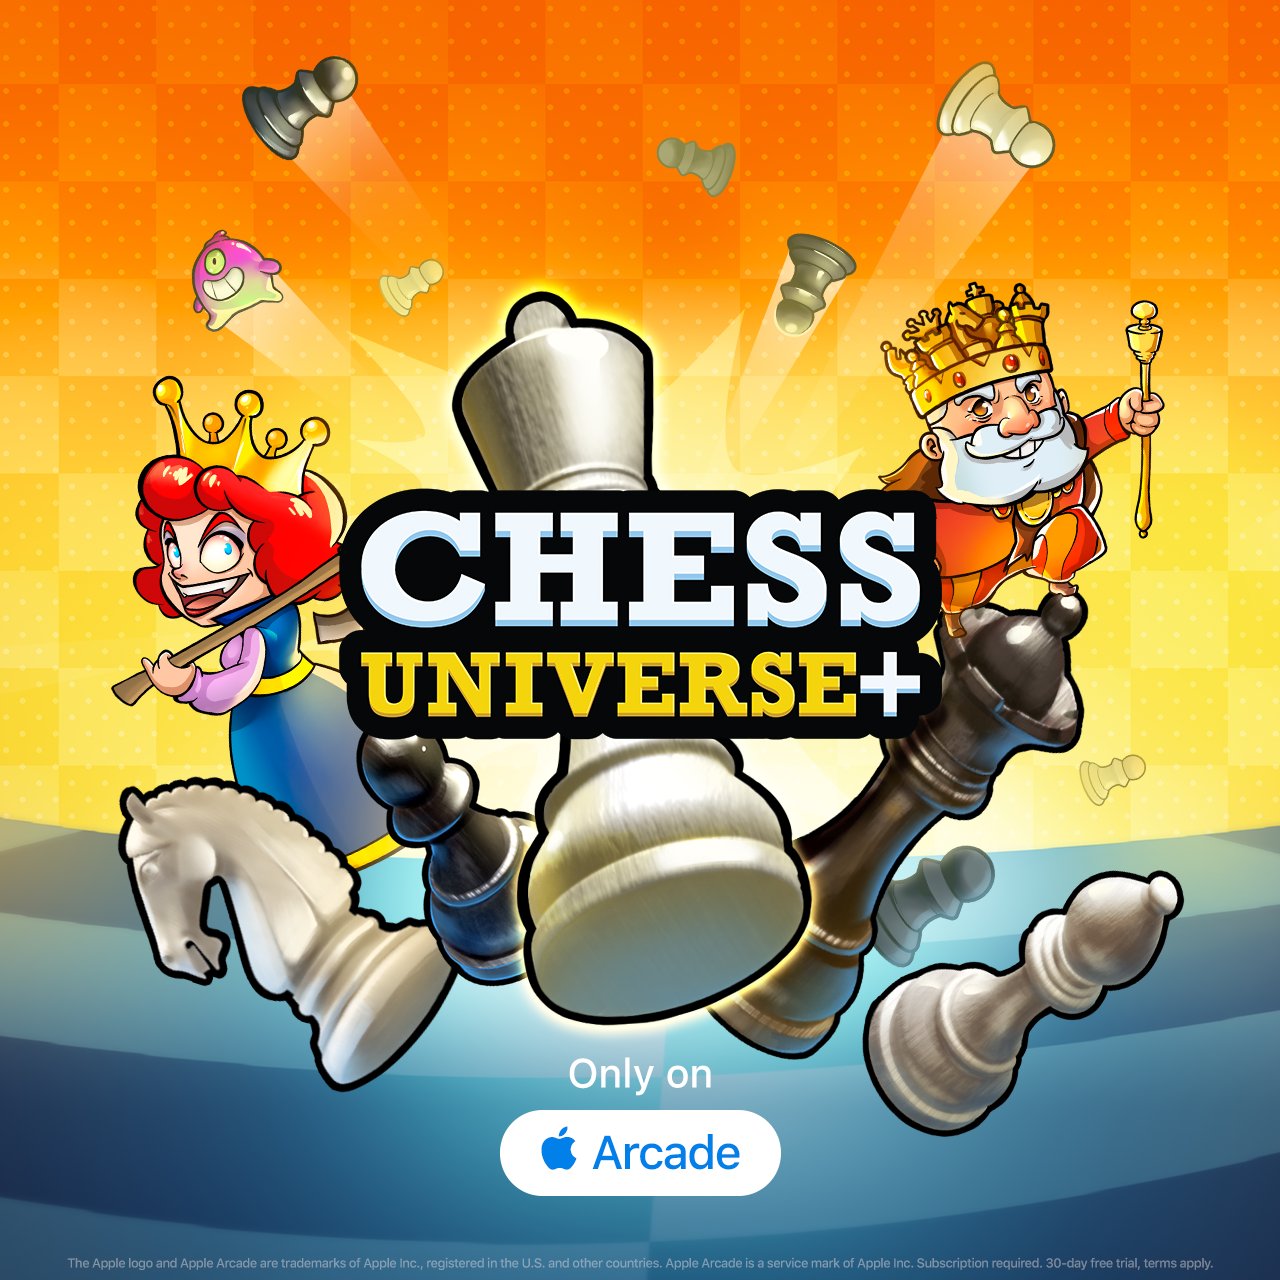 Chess Universe Club - clube de xadrez 